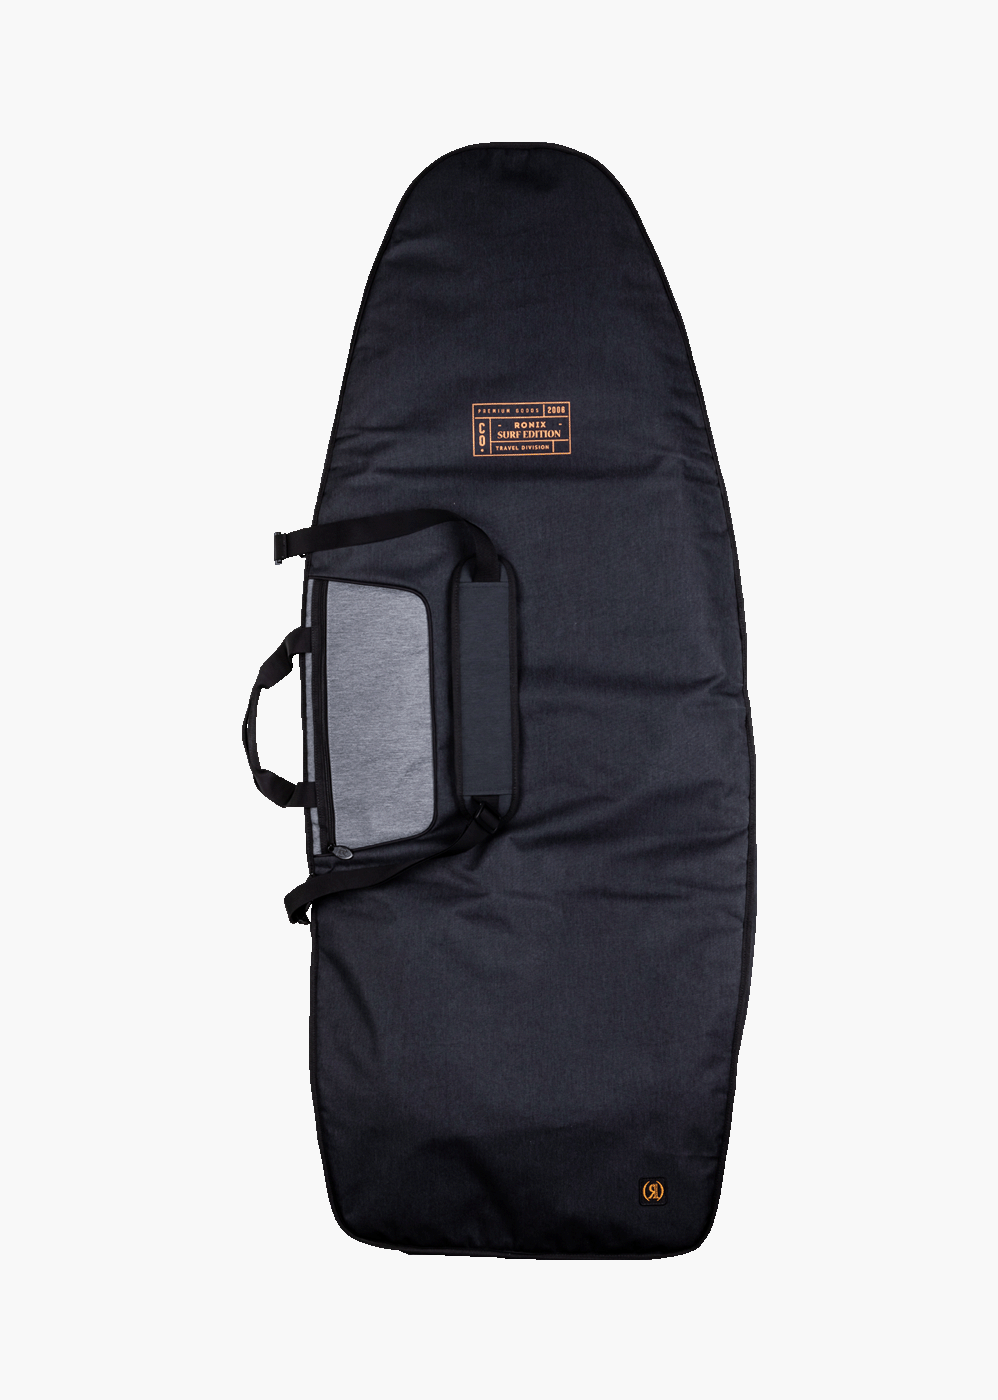 Wakeboard, Wakesurf and Wakeskate Board Bags | Ronix Wakeboards 